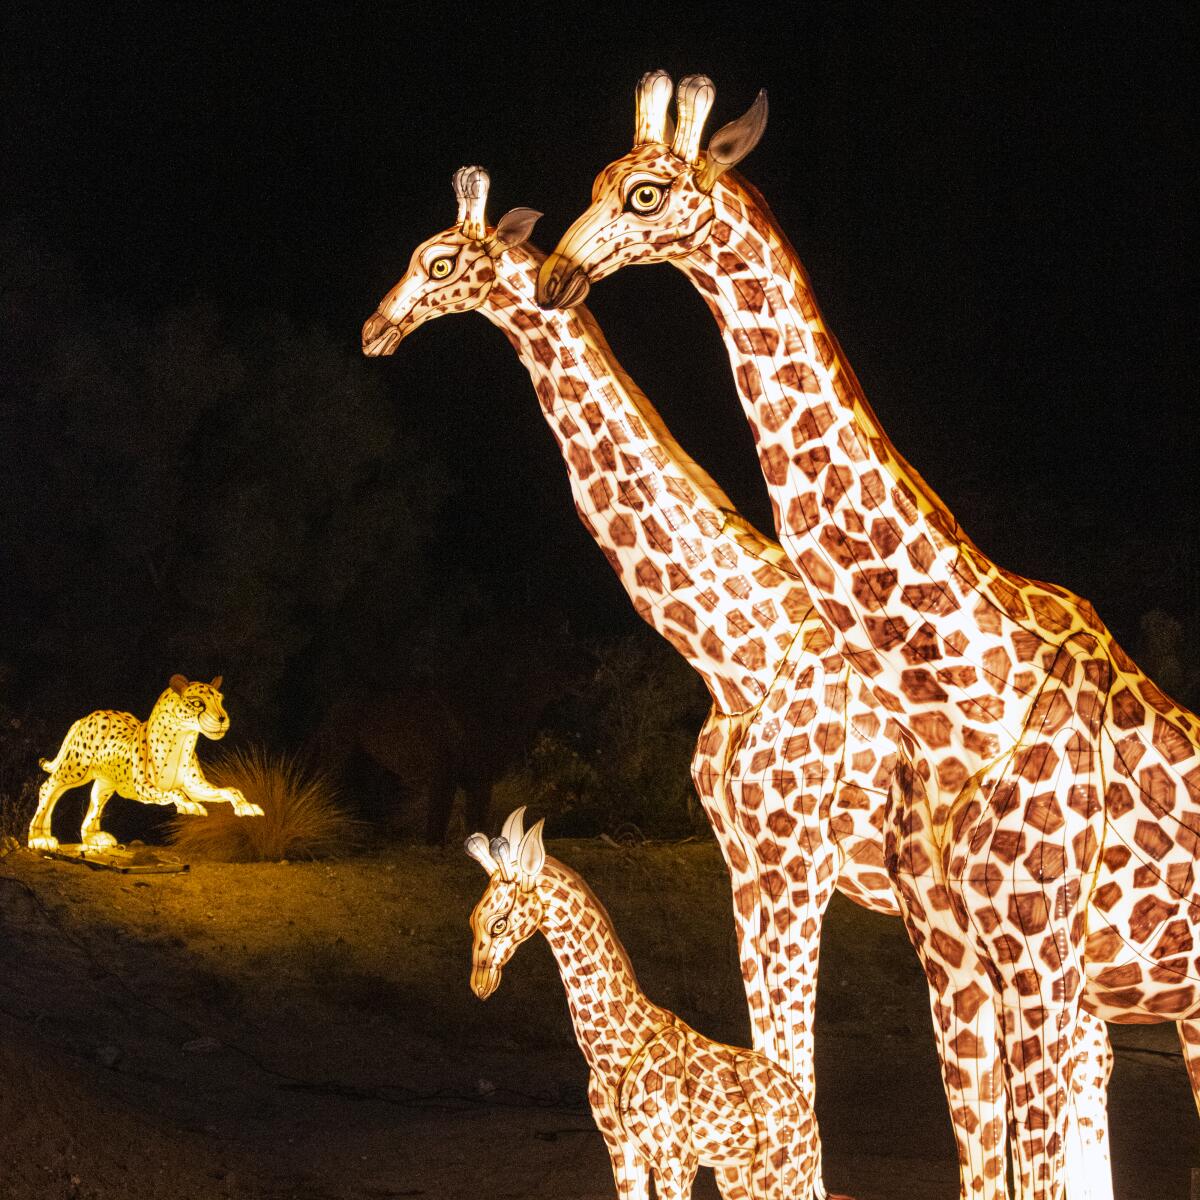 Life-size lantern figures of giraffes and a cheetah.